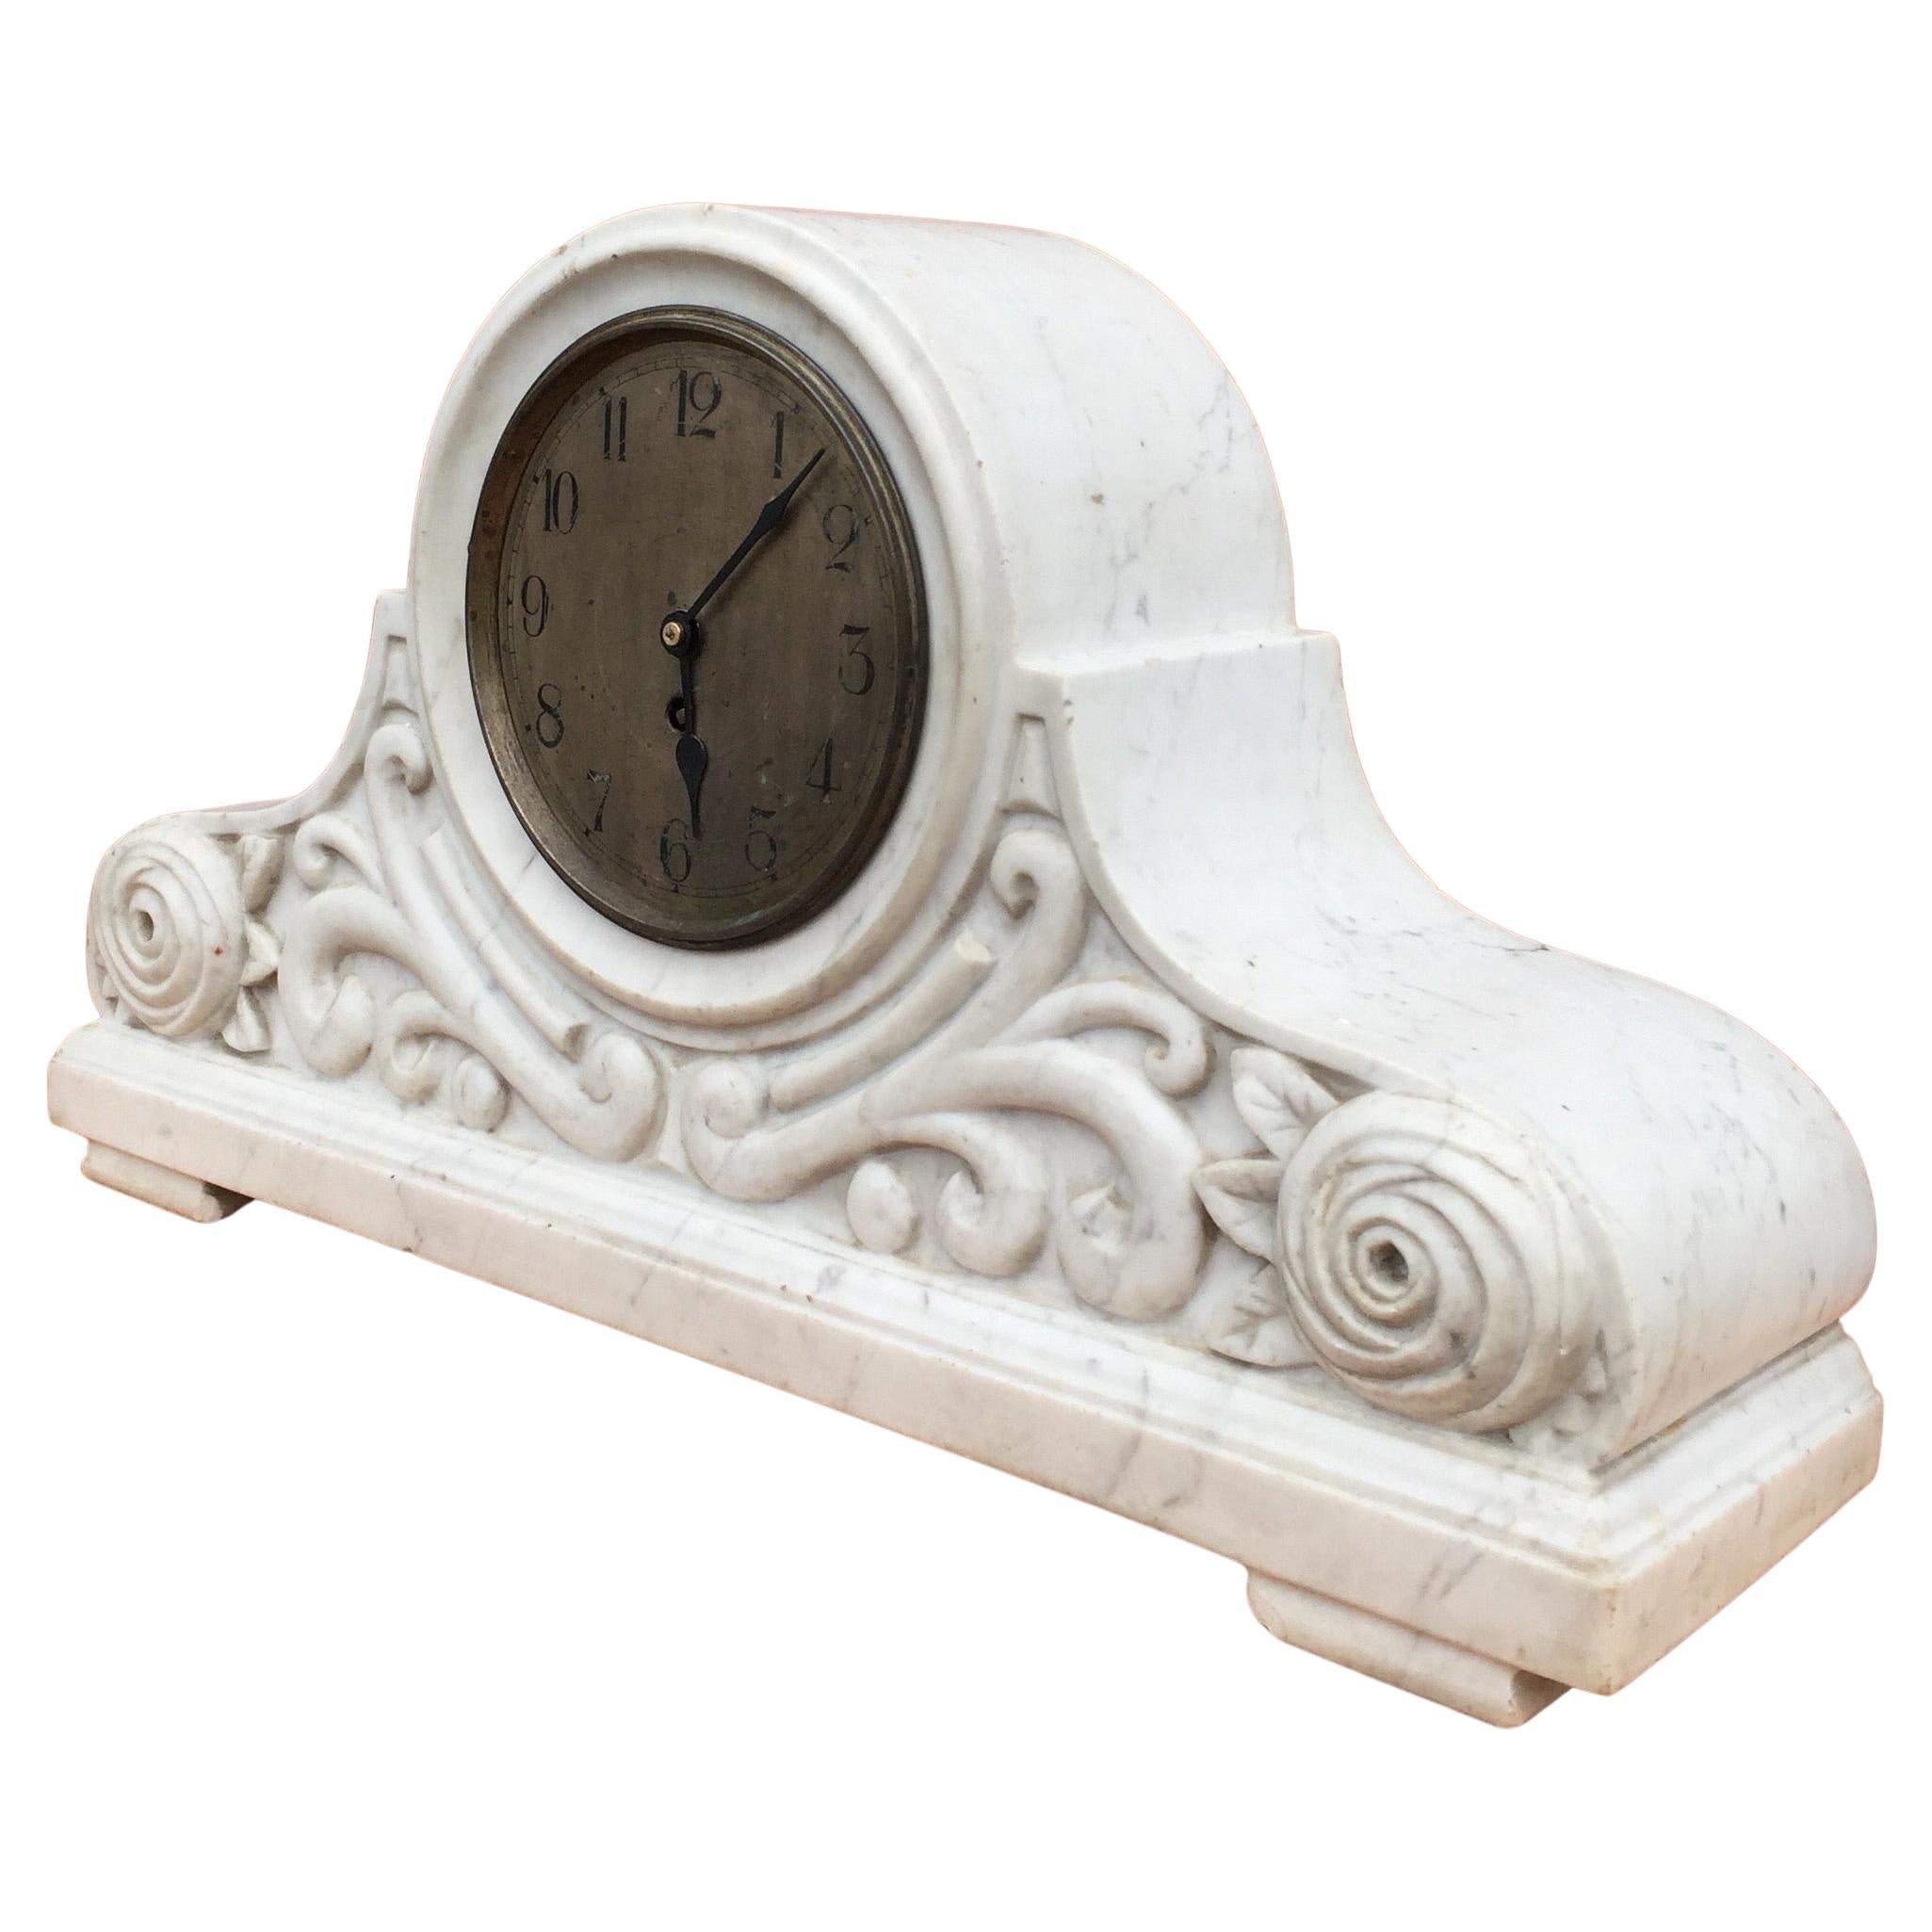 Brilliant Art Deco Italian White Carrara Marble Table Clock with Stylish Roses